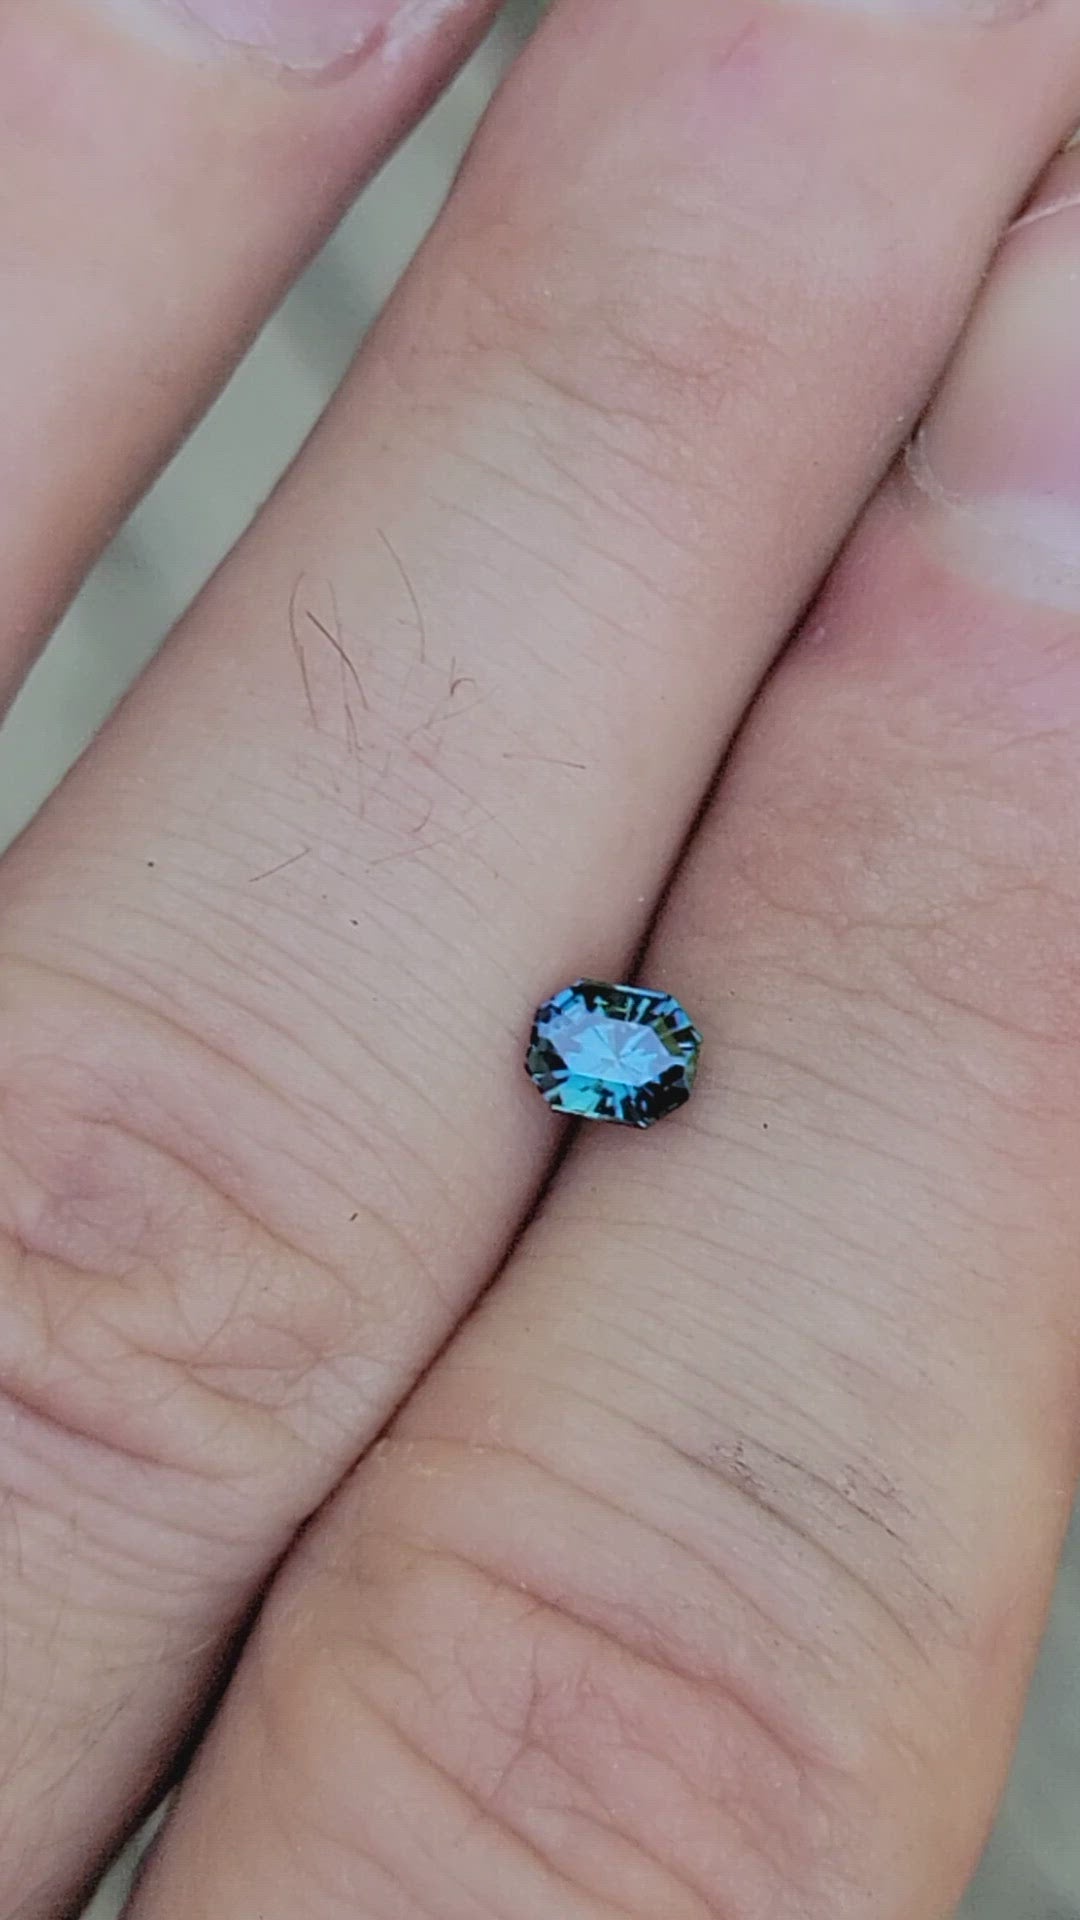 0,51 carat Turquoise/Bleu Saphir Long Octogone - Taille Fantaisie, 4,9x4 mm